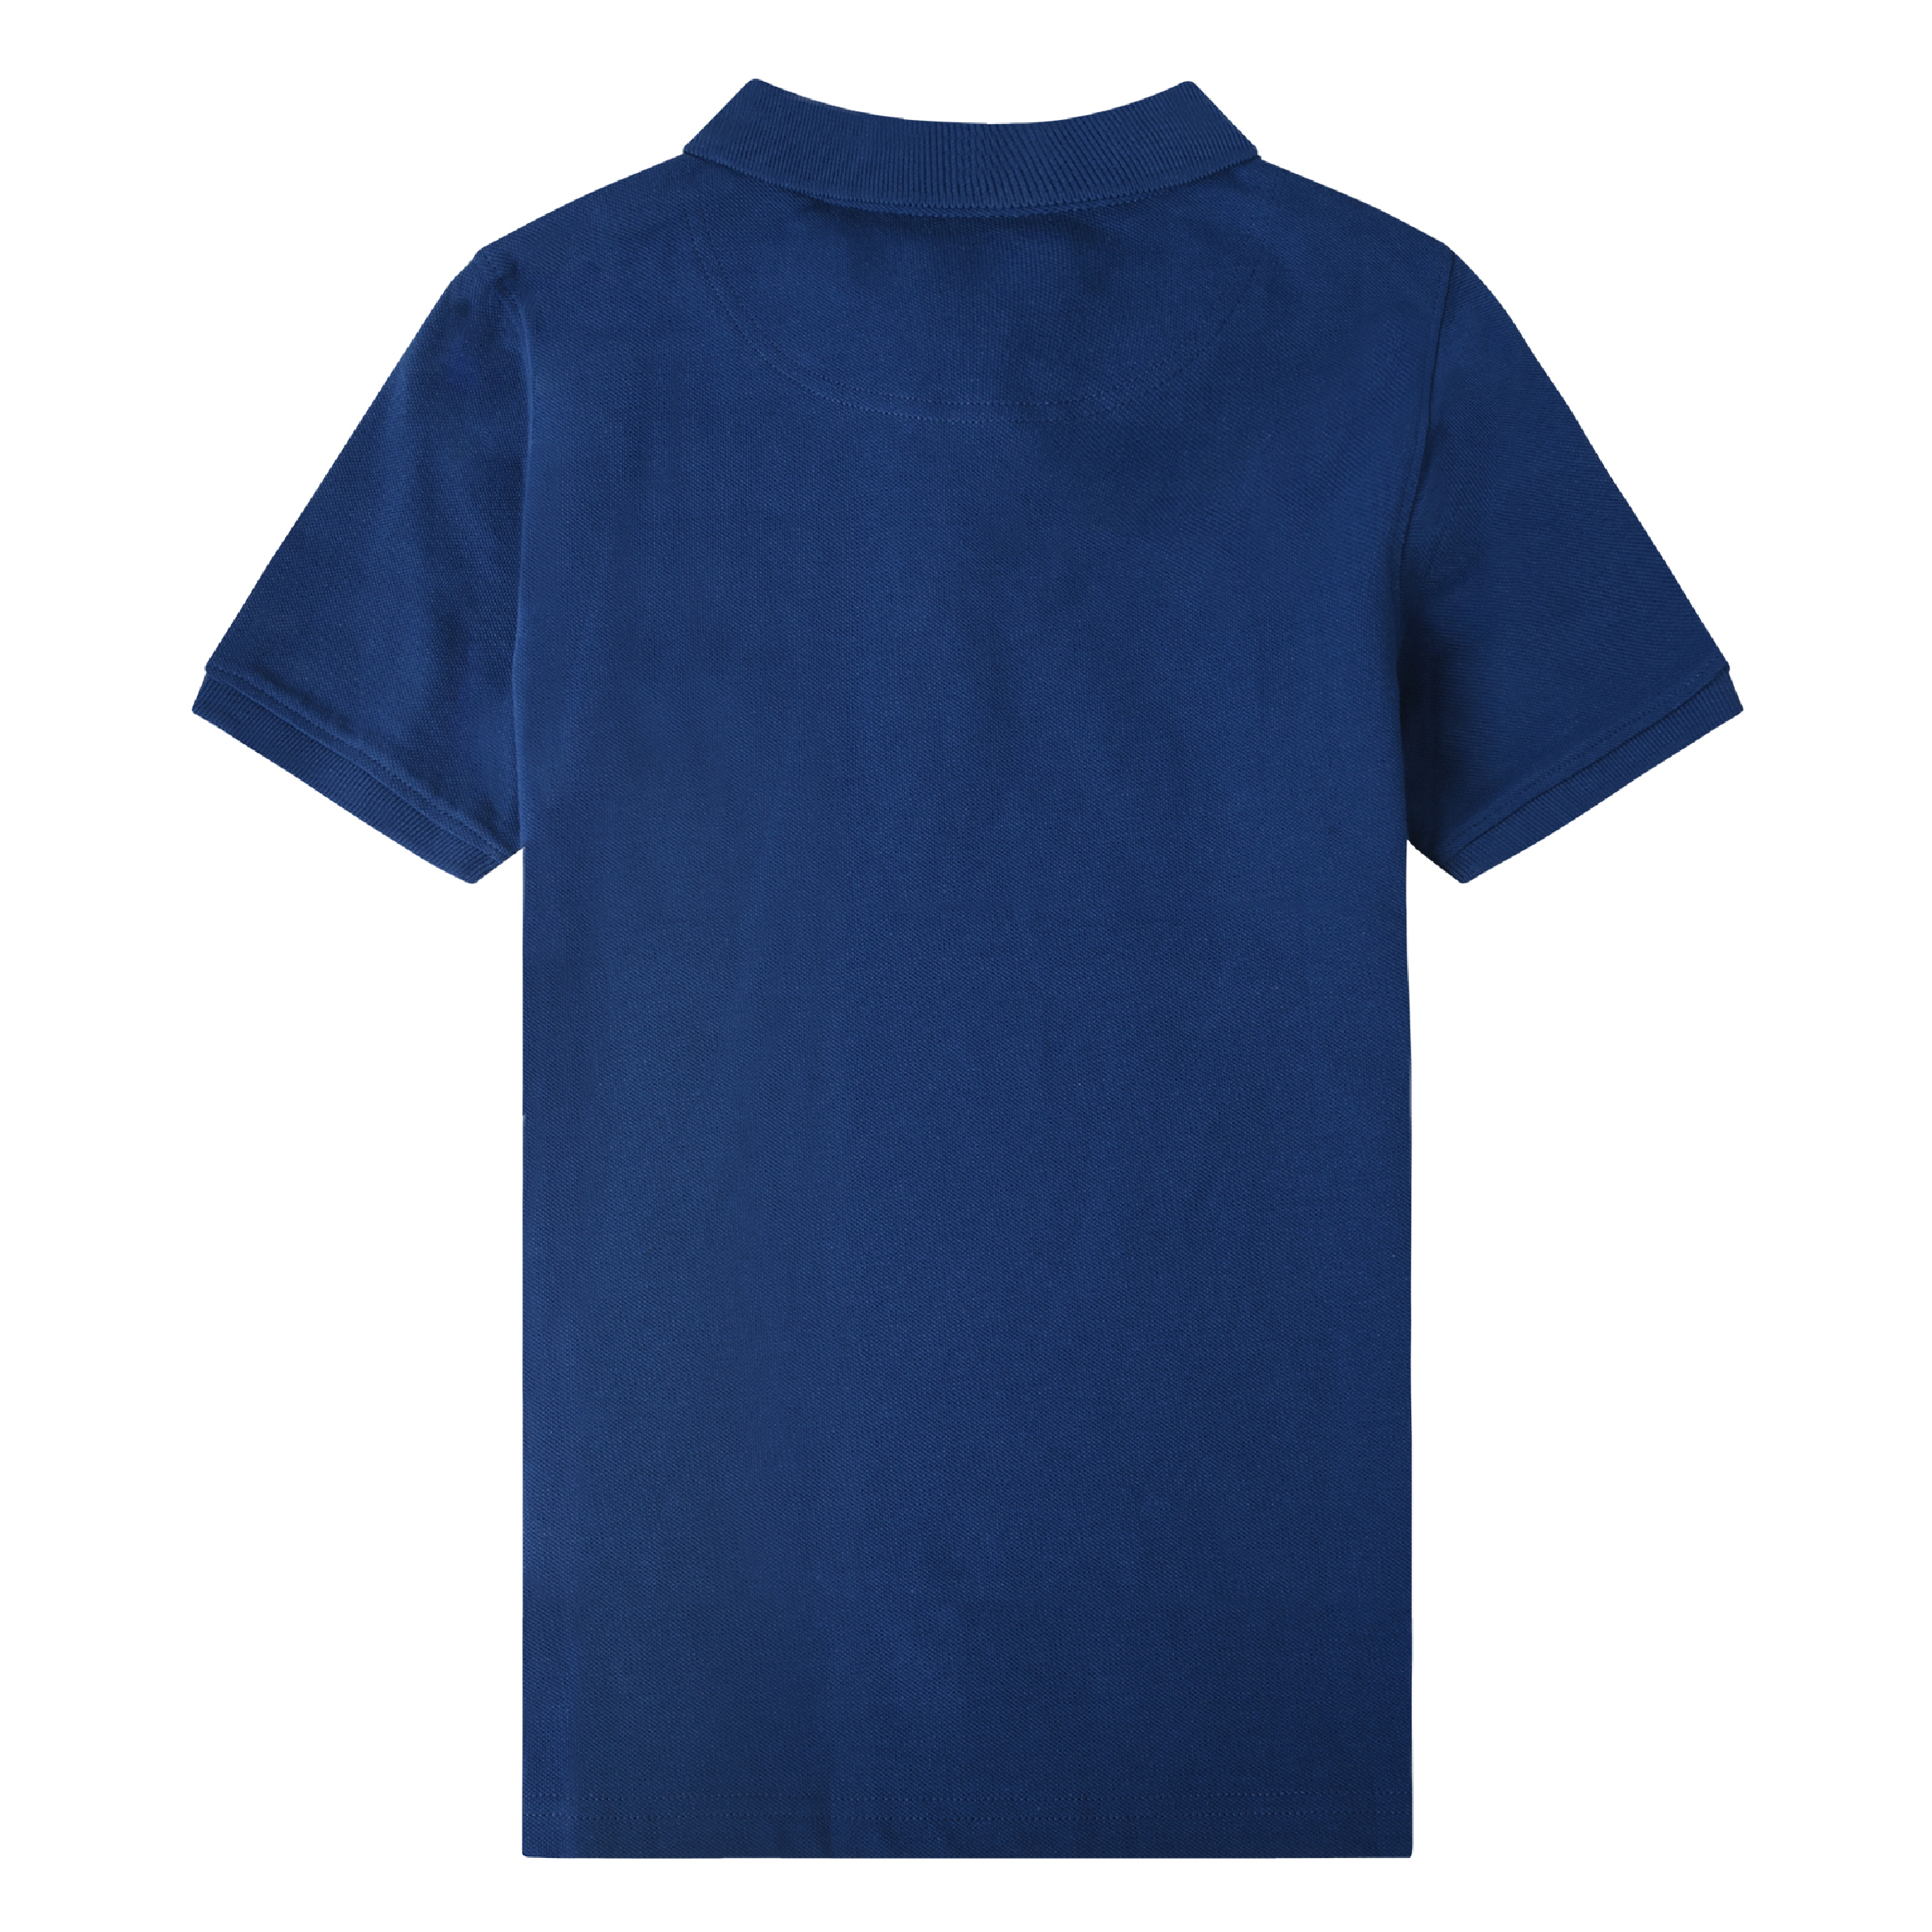 Jongens Classic Polo Shirt Estate Blue van Lyle & Scott in de kleur Estate Blue in maat 170-176.